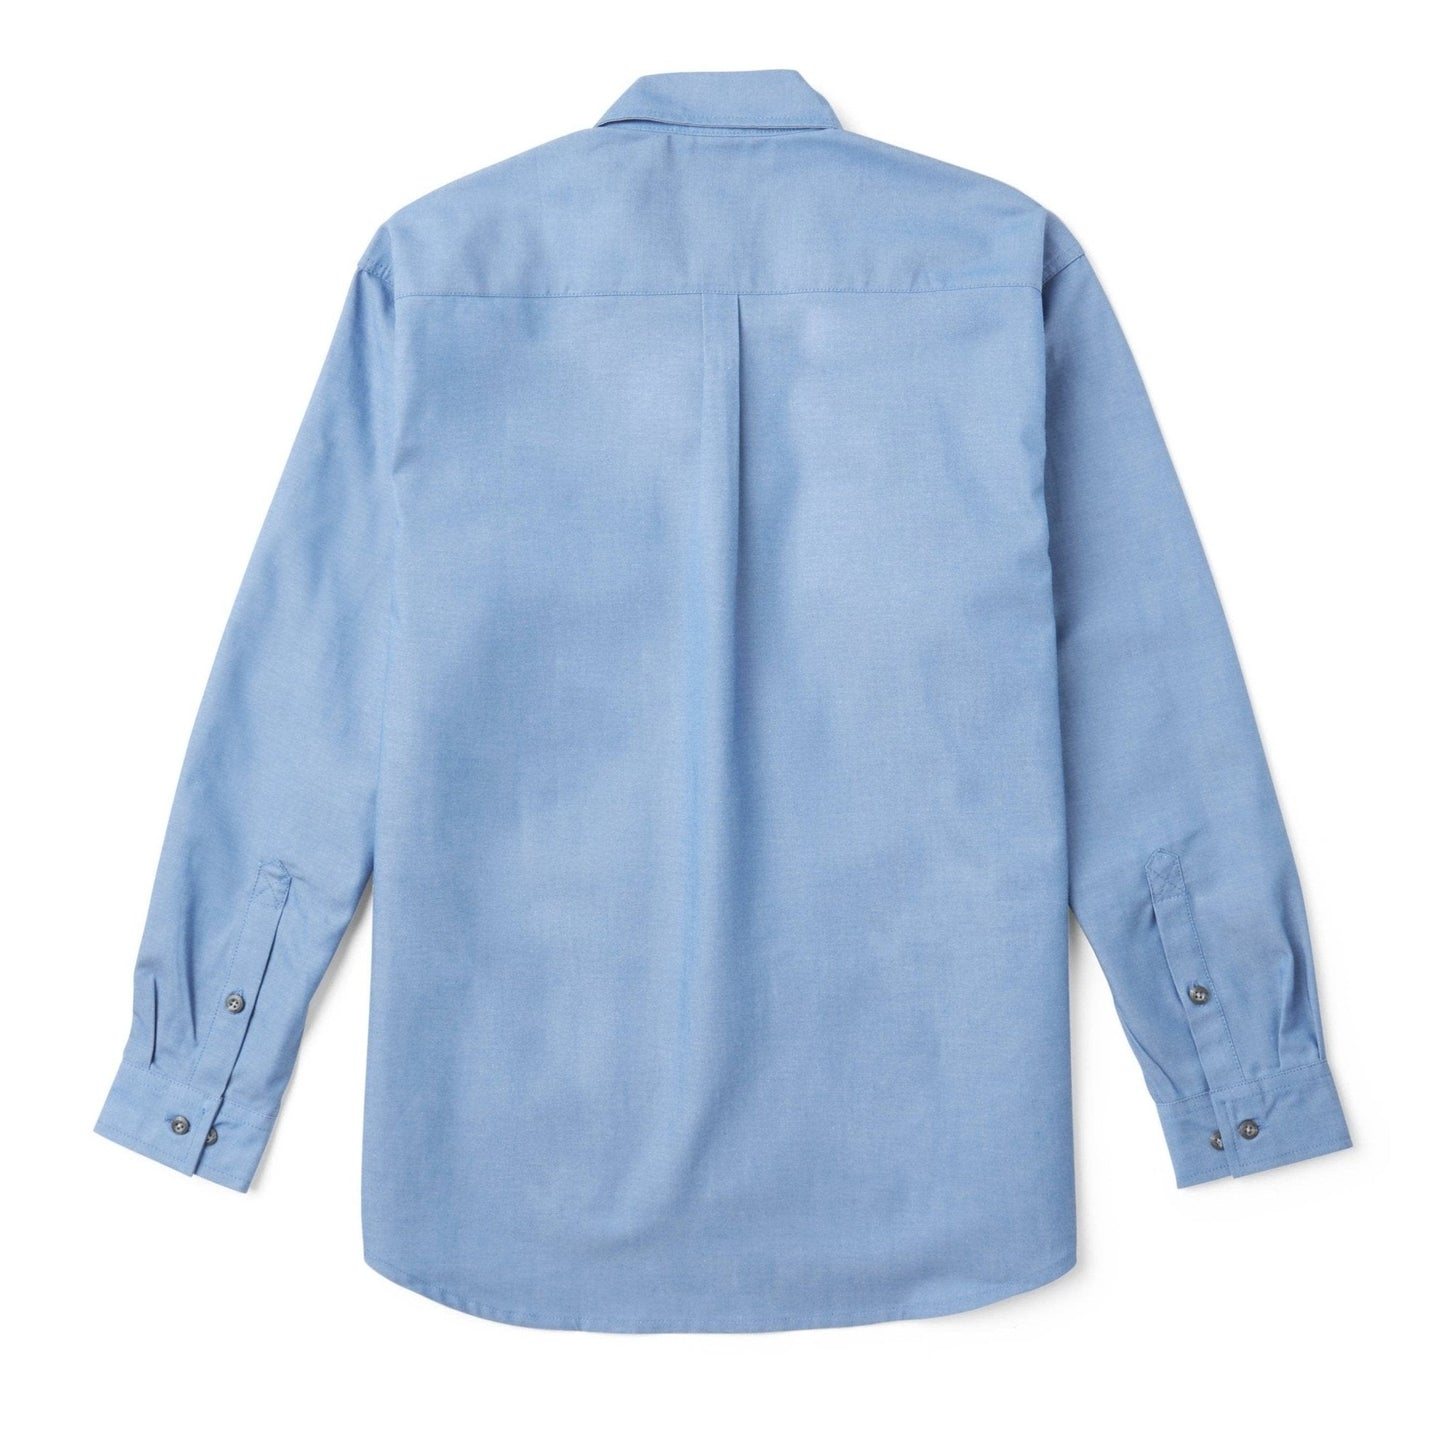 FR Uniform Shirt - Chambray (CLOSEOUT) - Rasco FR